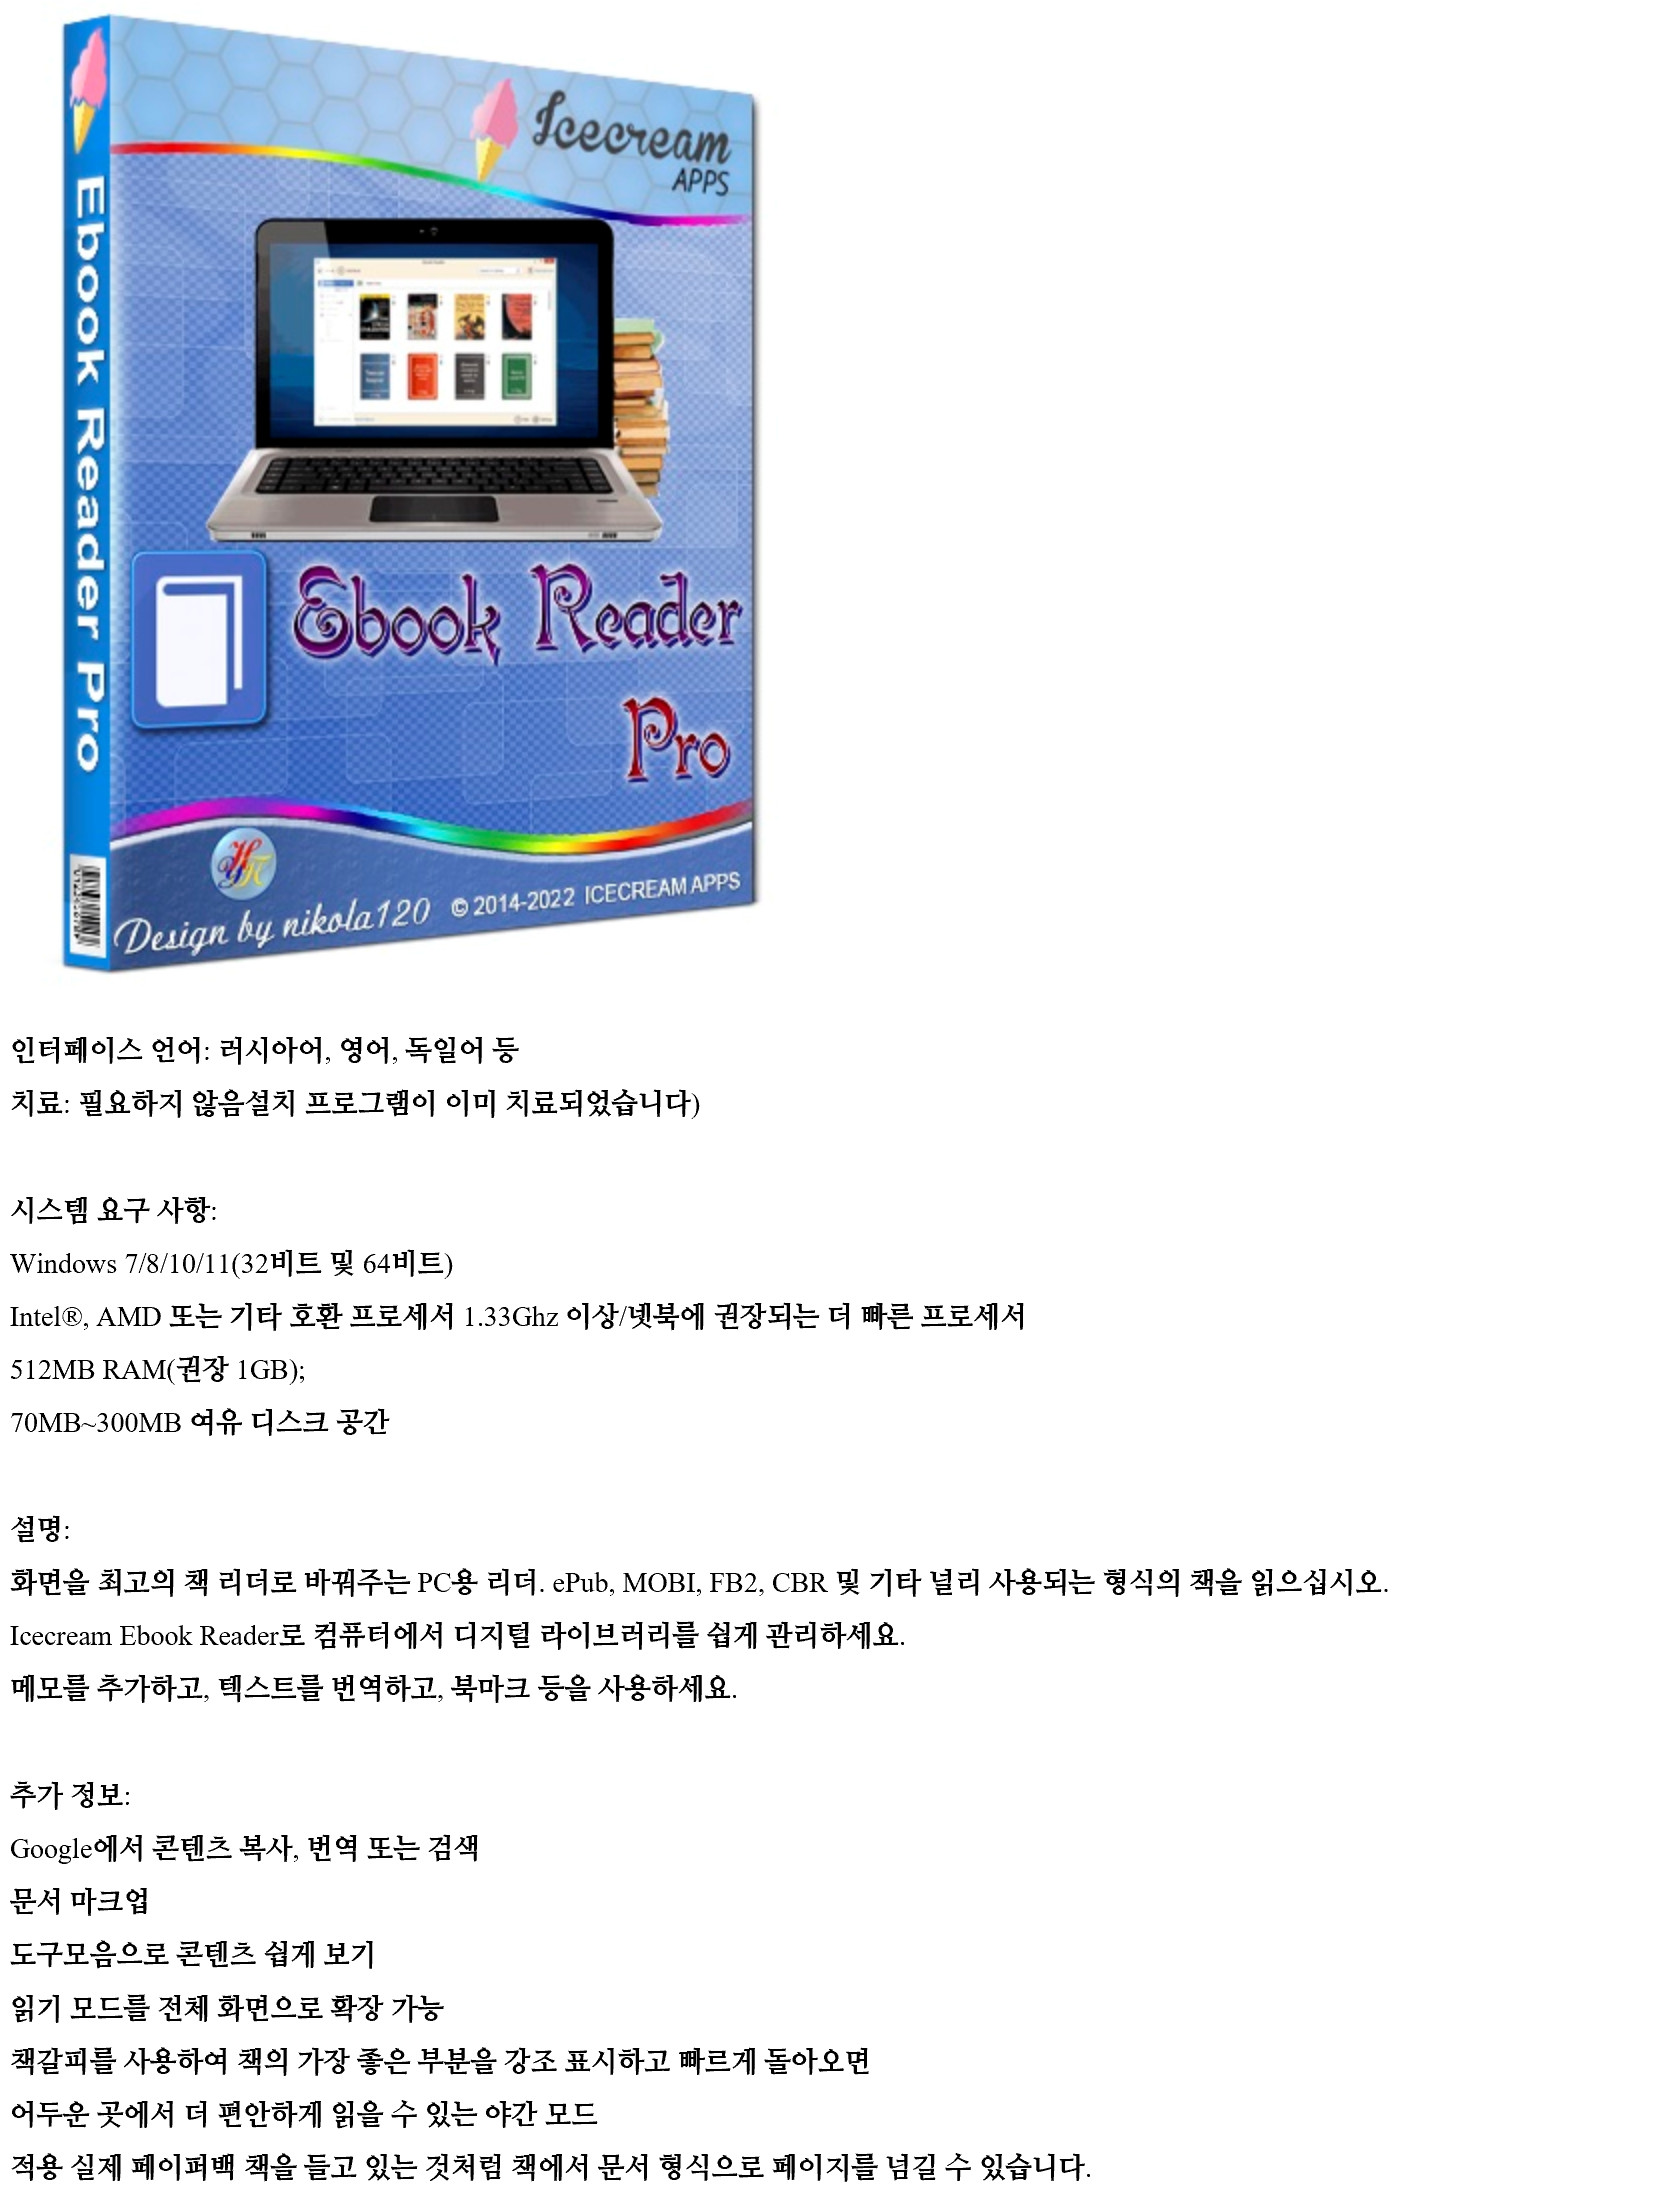 IceCream Ebook Reader 6.44 Pro download the new